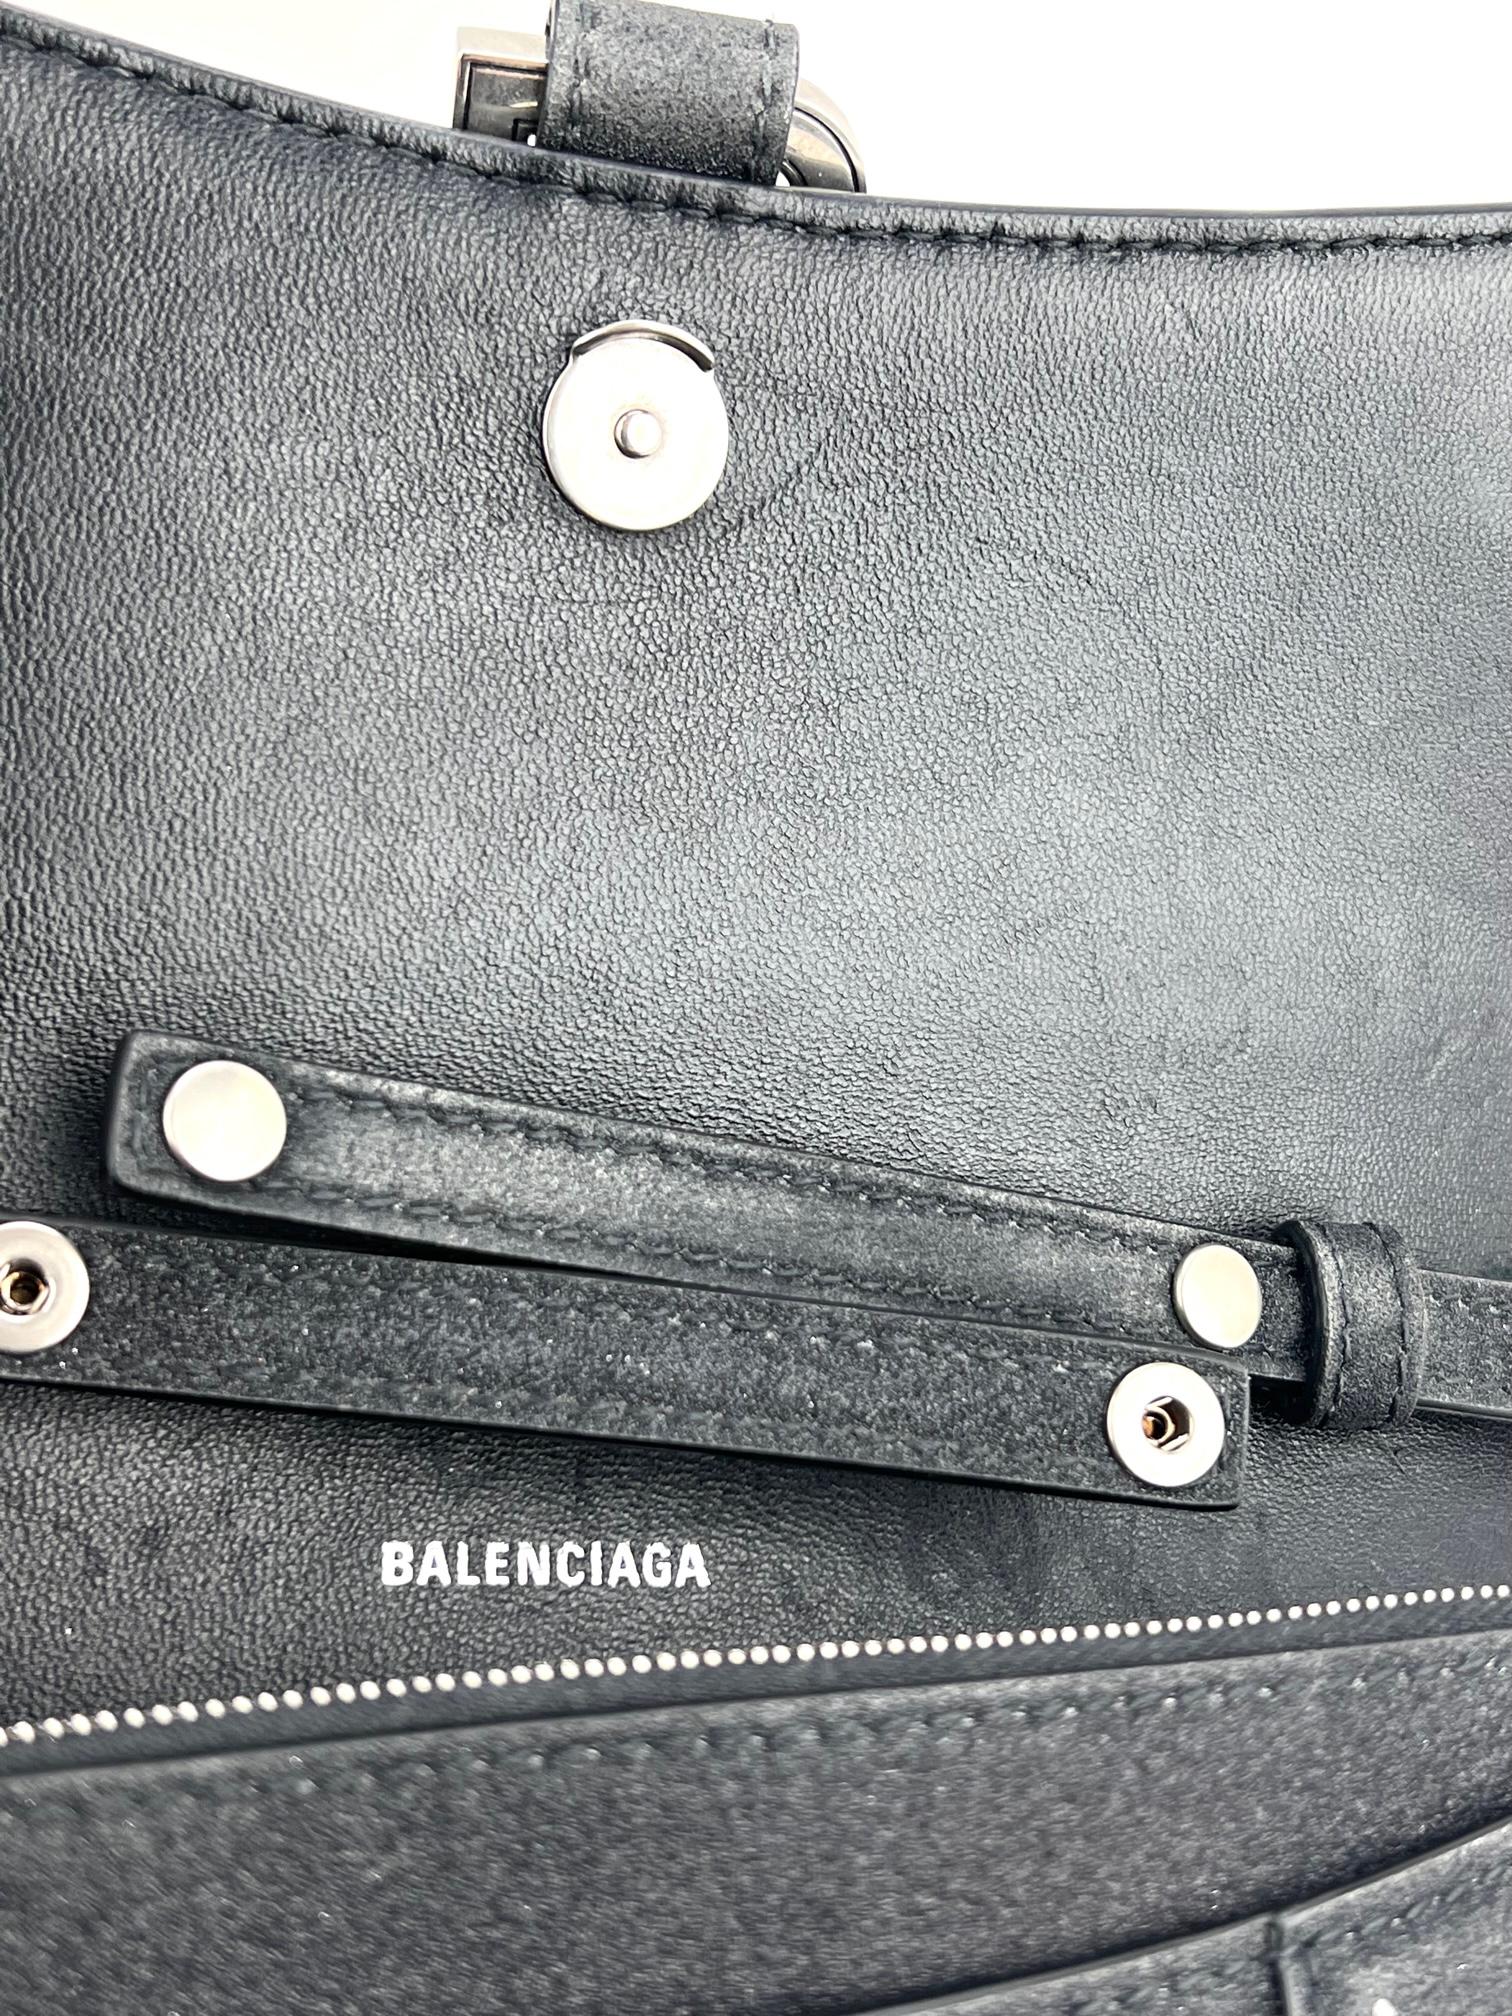 BALENCIAGA Hourglass Wallet On Chain Black Glitter Clutch Shoulder Bag For Sale 5